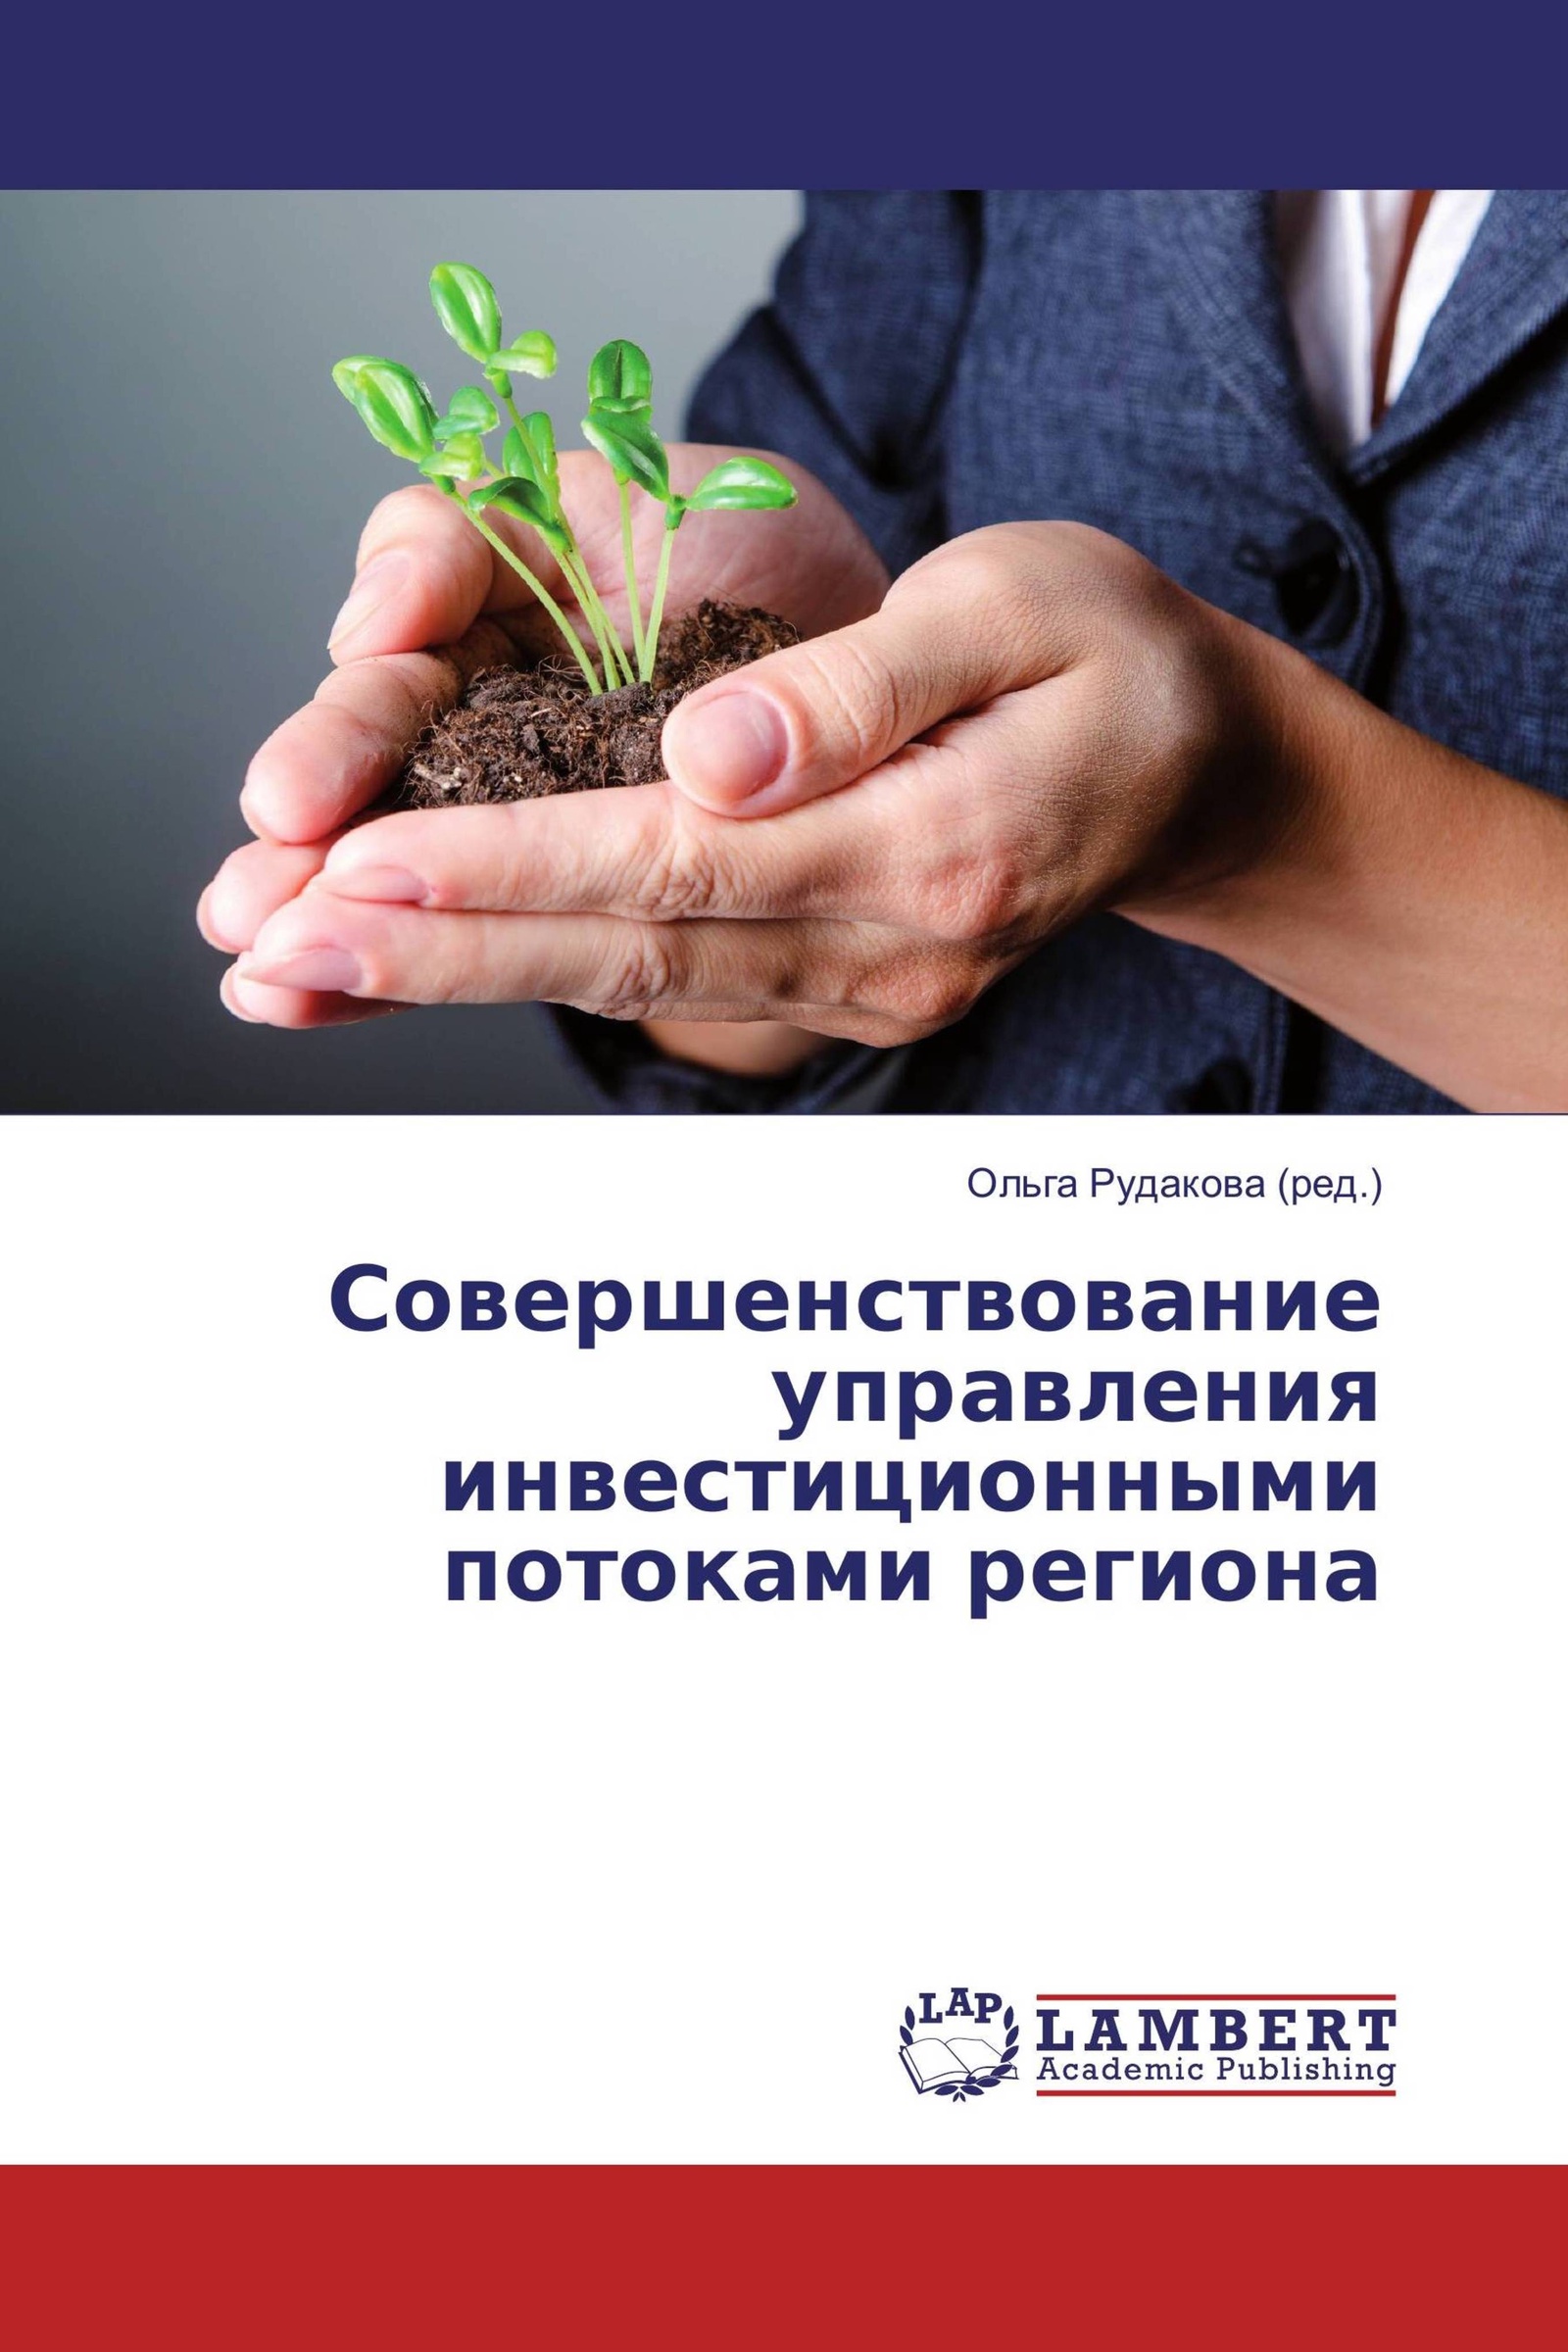 Plant resources. Microfinance. Экологические решения. Corporate social responsibility. Soil quality Analysis firms.